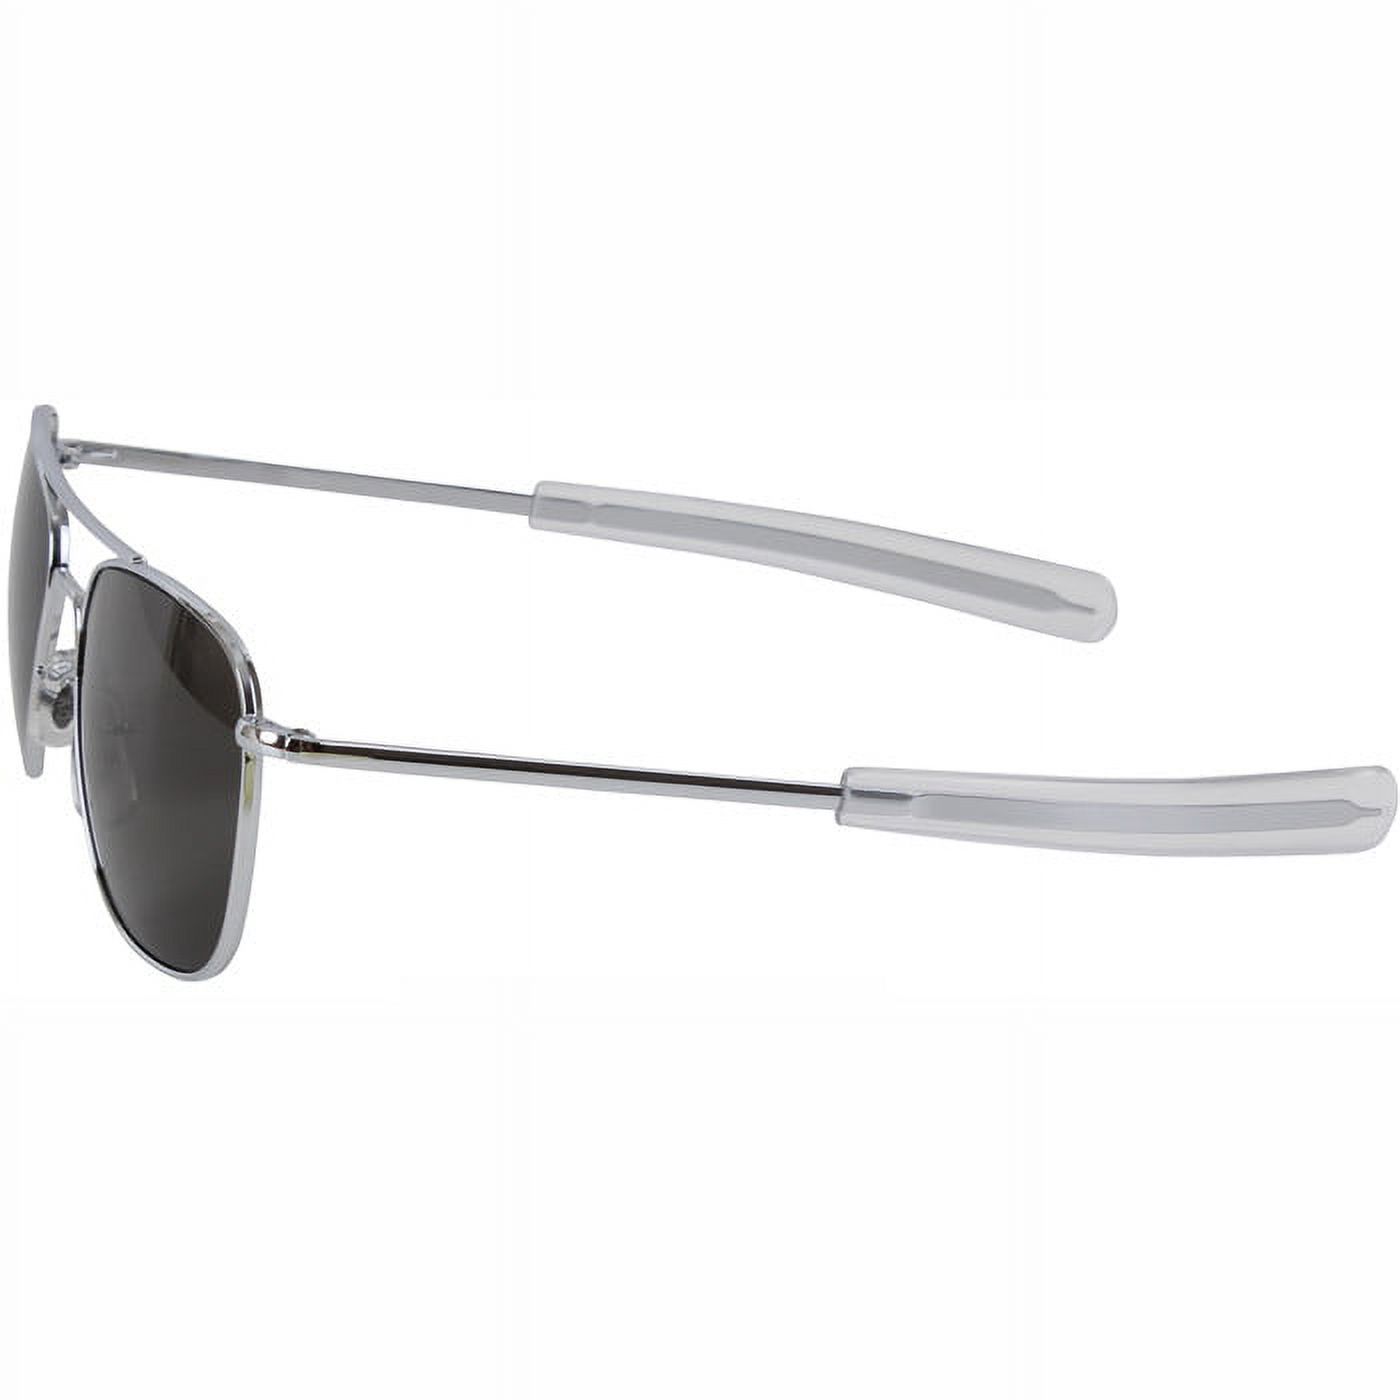 American Optics 52MM Polarized Sunglasses - 10706 - Chrome - image 2 of 4